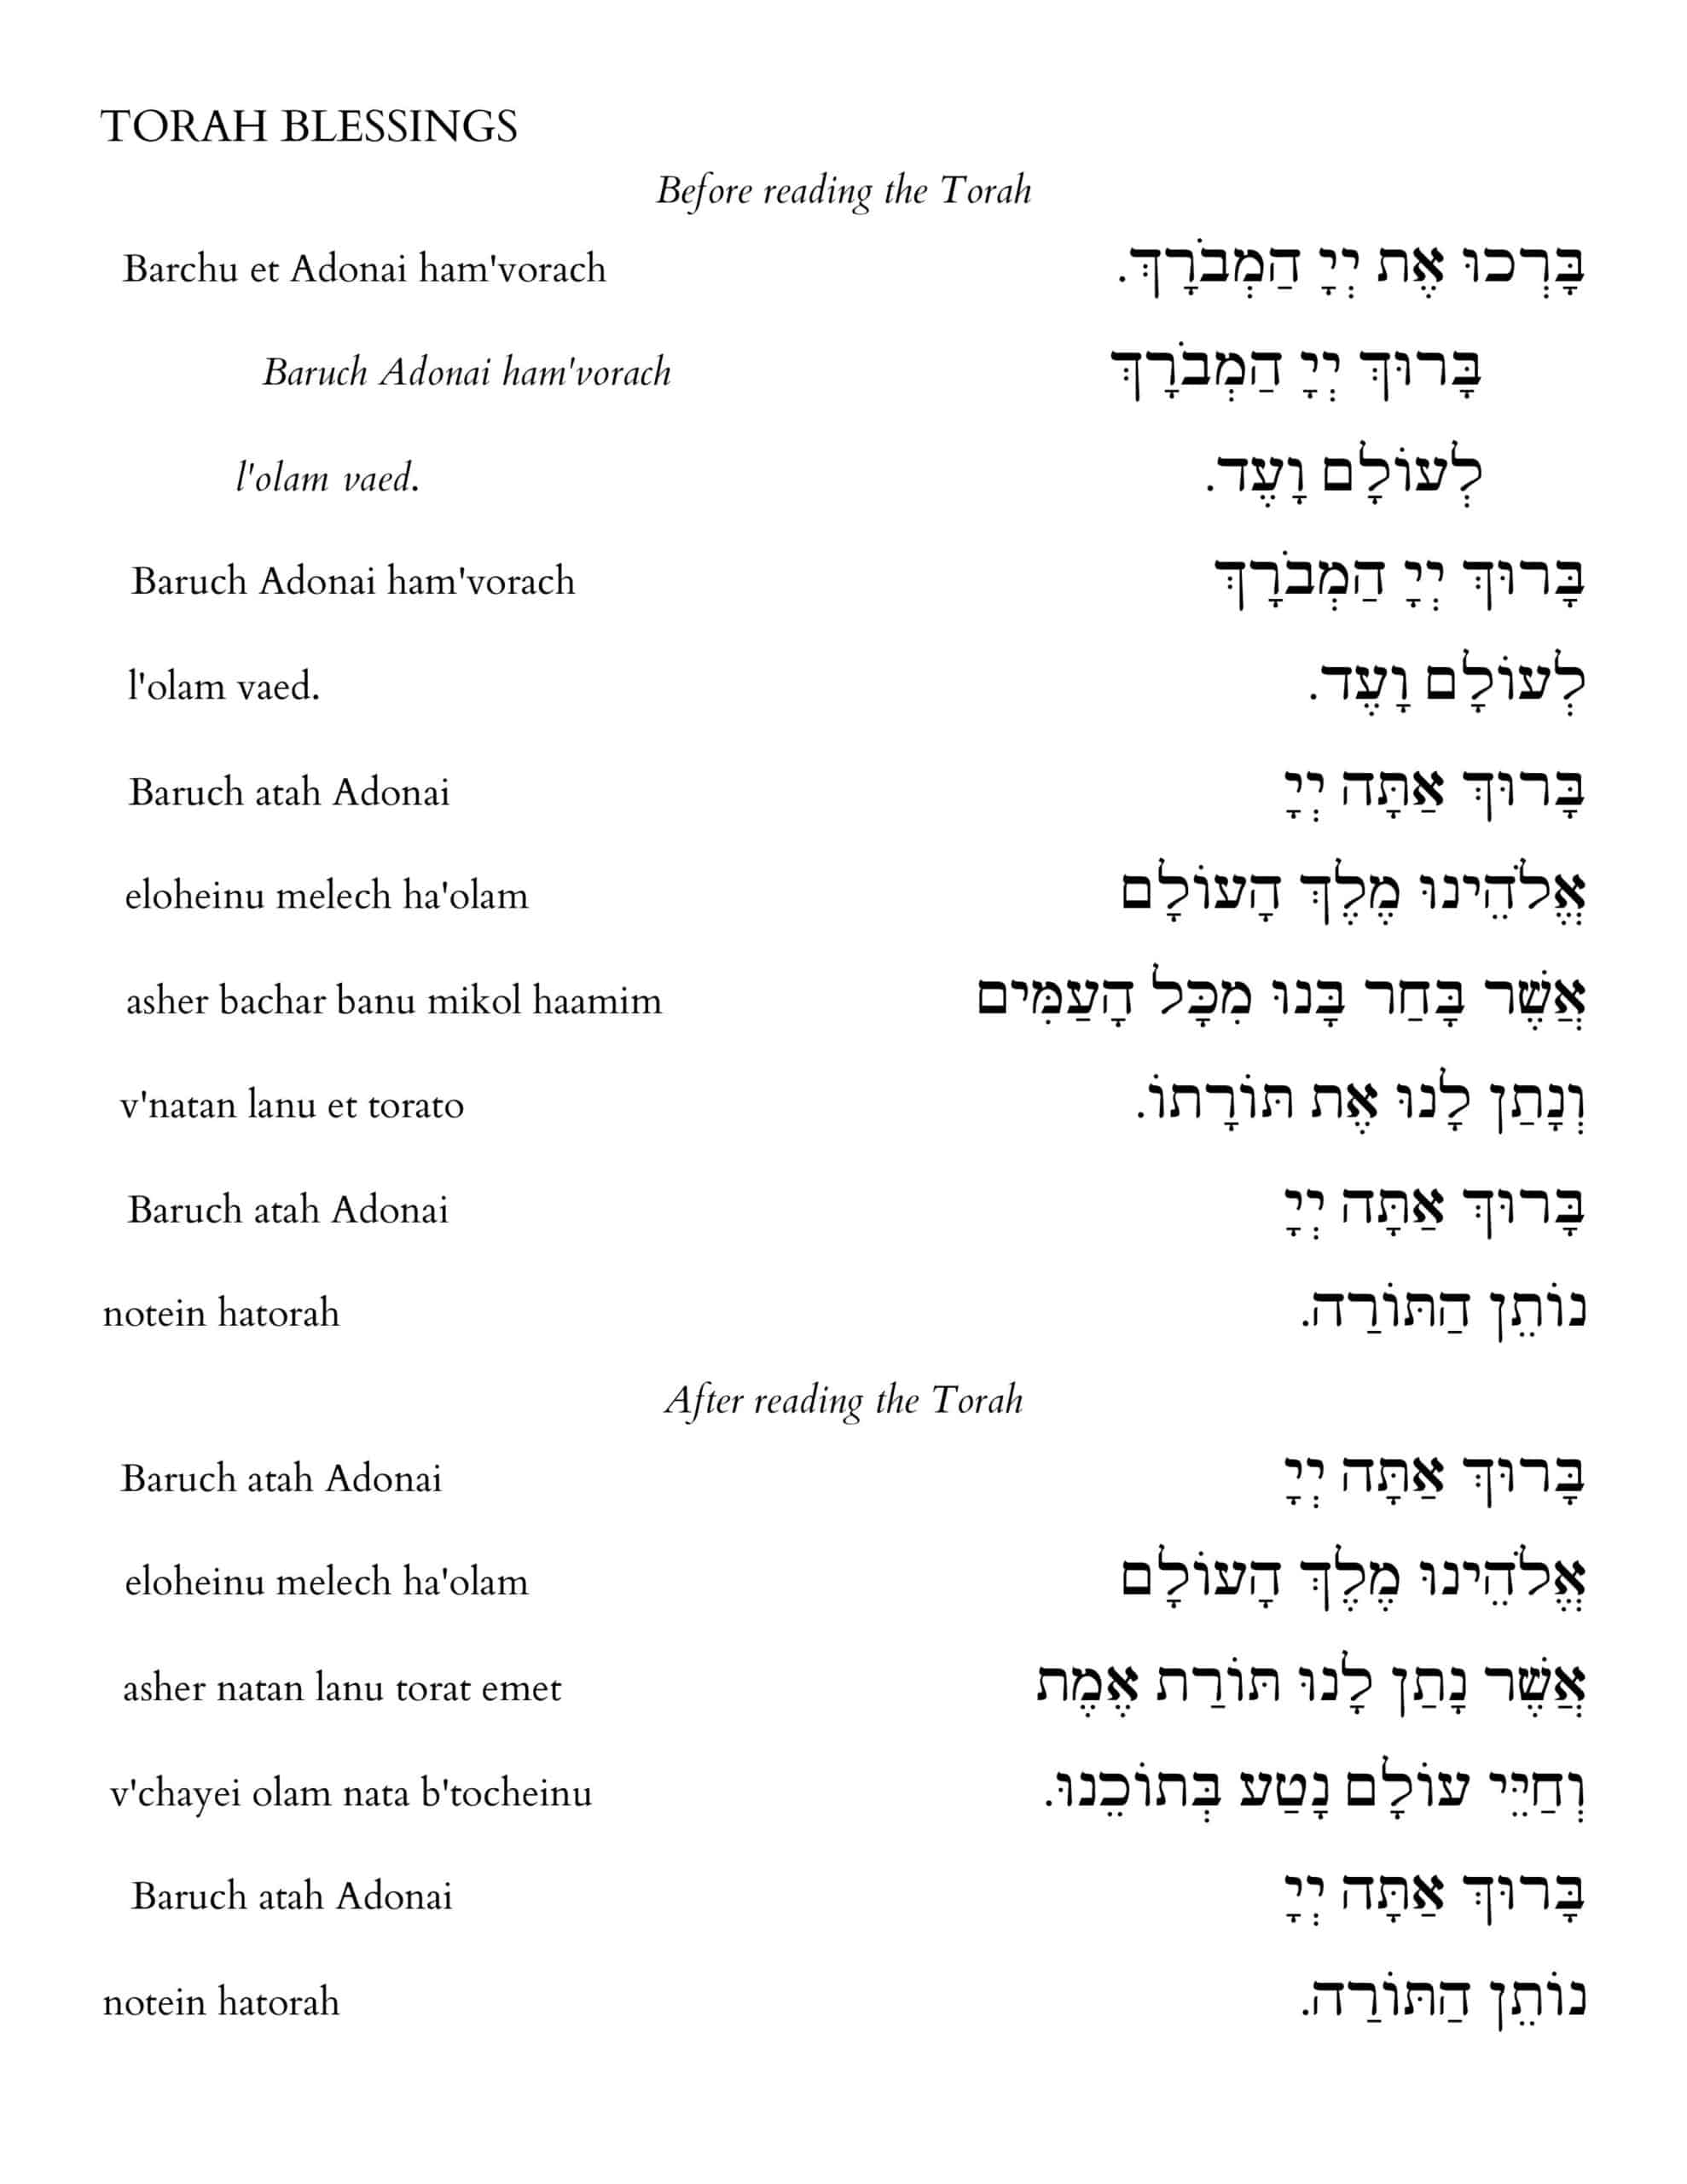 english transliteration of hebrew prayers